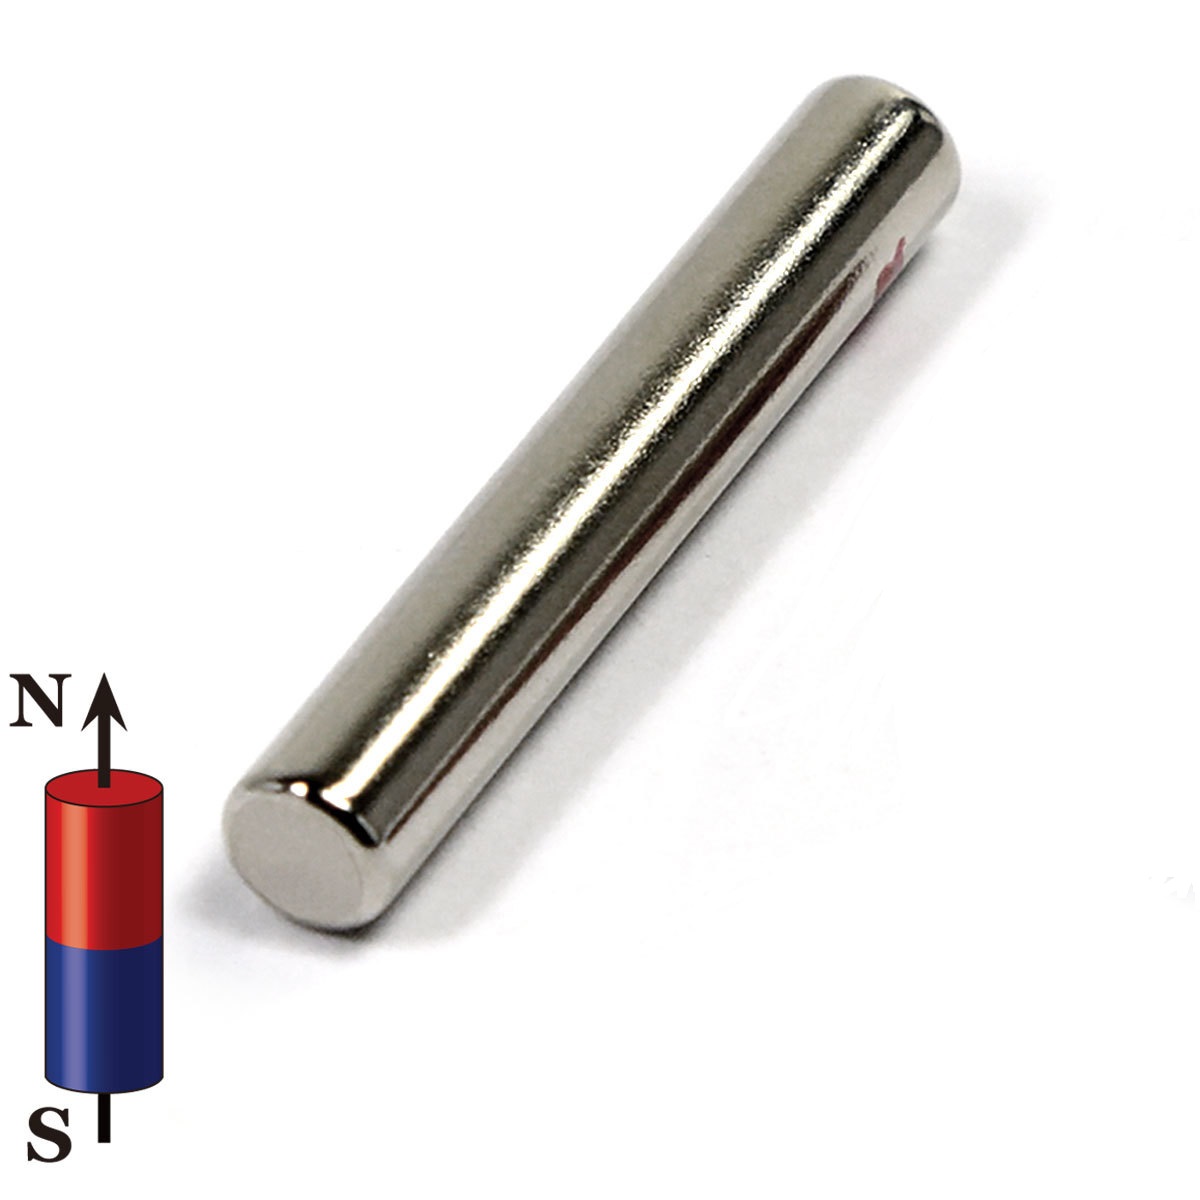 Neodymium Rod Magnets, Neodymium Rod & Cylinder Rare-Earth Magnets, neodymium cylindrical rod magnet, neodymium rod magnets, cylinder magnets, NdFeB rod magnets, NdFeB cylindrical magnets, Round magnets, disc cylinder or bar-shaped NdFeB magnets, rod-bar-magnet, neodymium rare earth cylinder rod, magnet, magnets